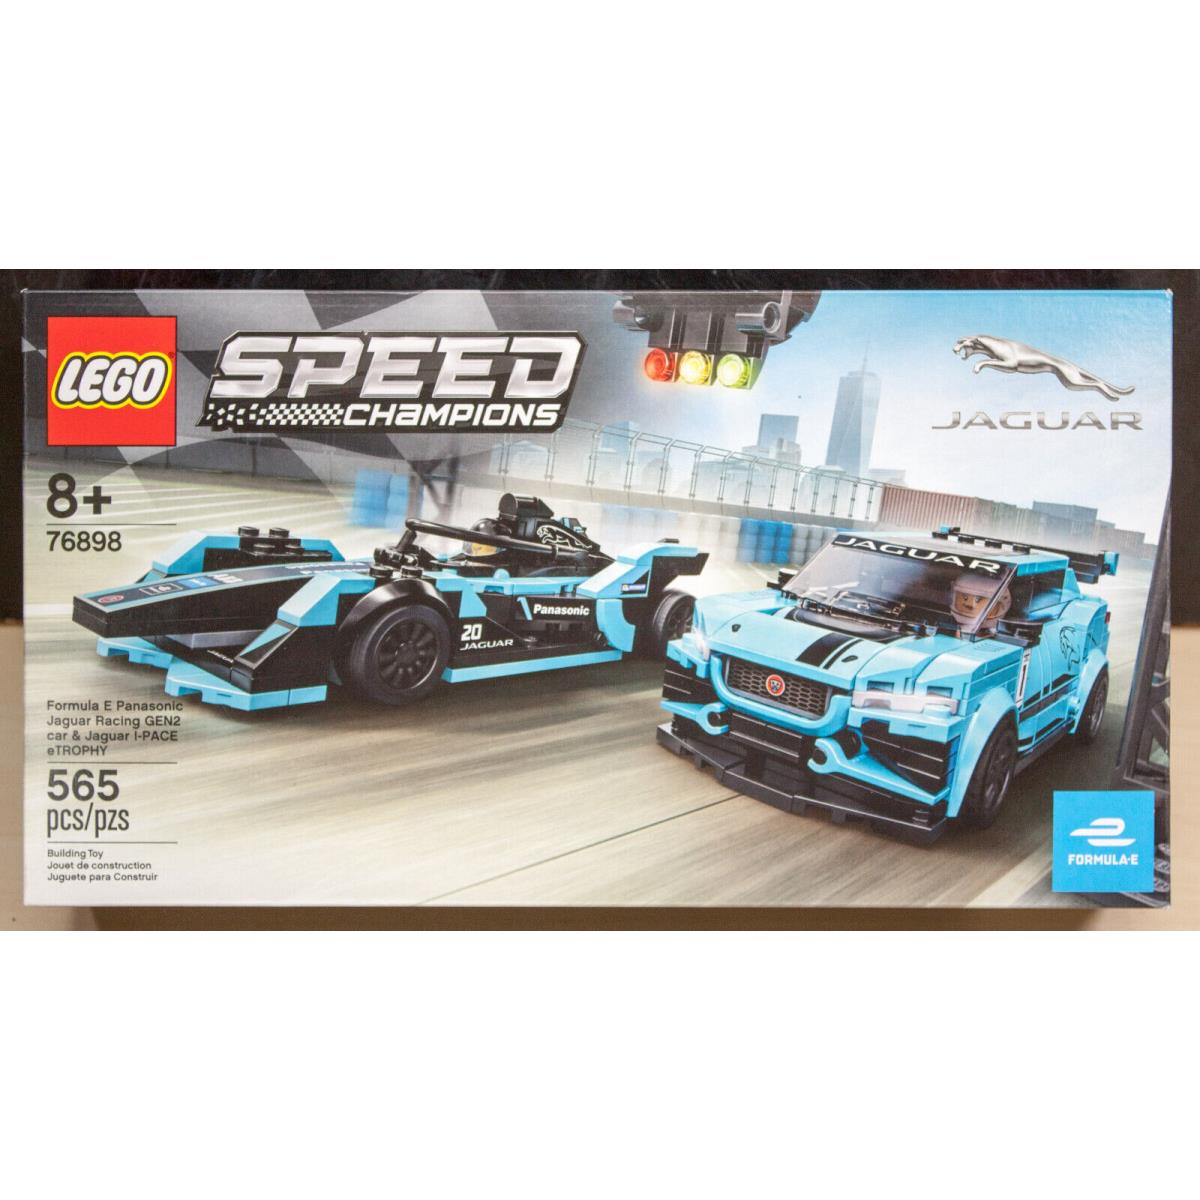 Lego Speed Champions Formula E Panasonic Jaguar and GEN2 I-pace Etrophy 76898